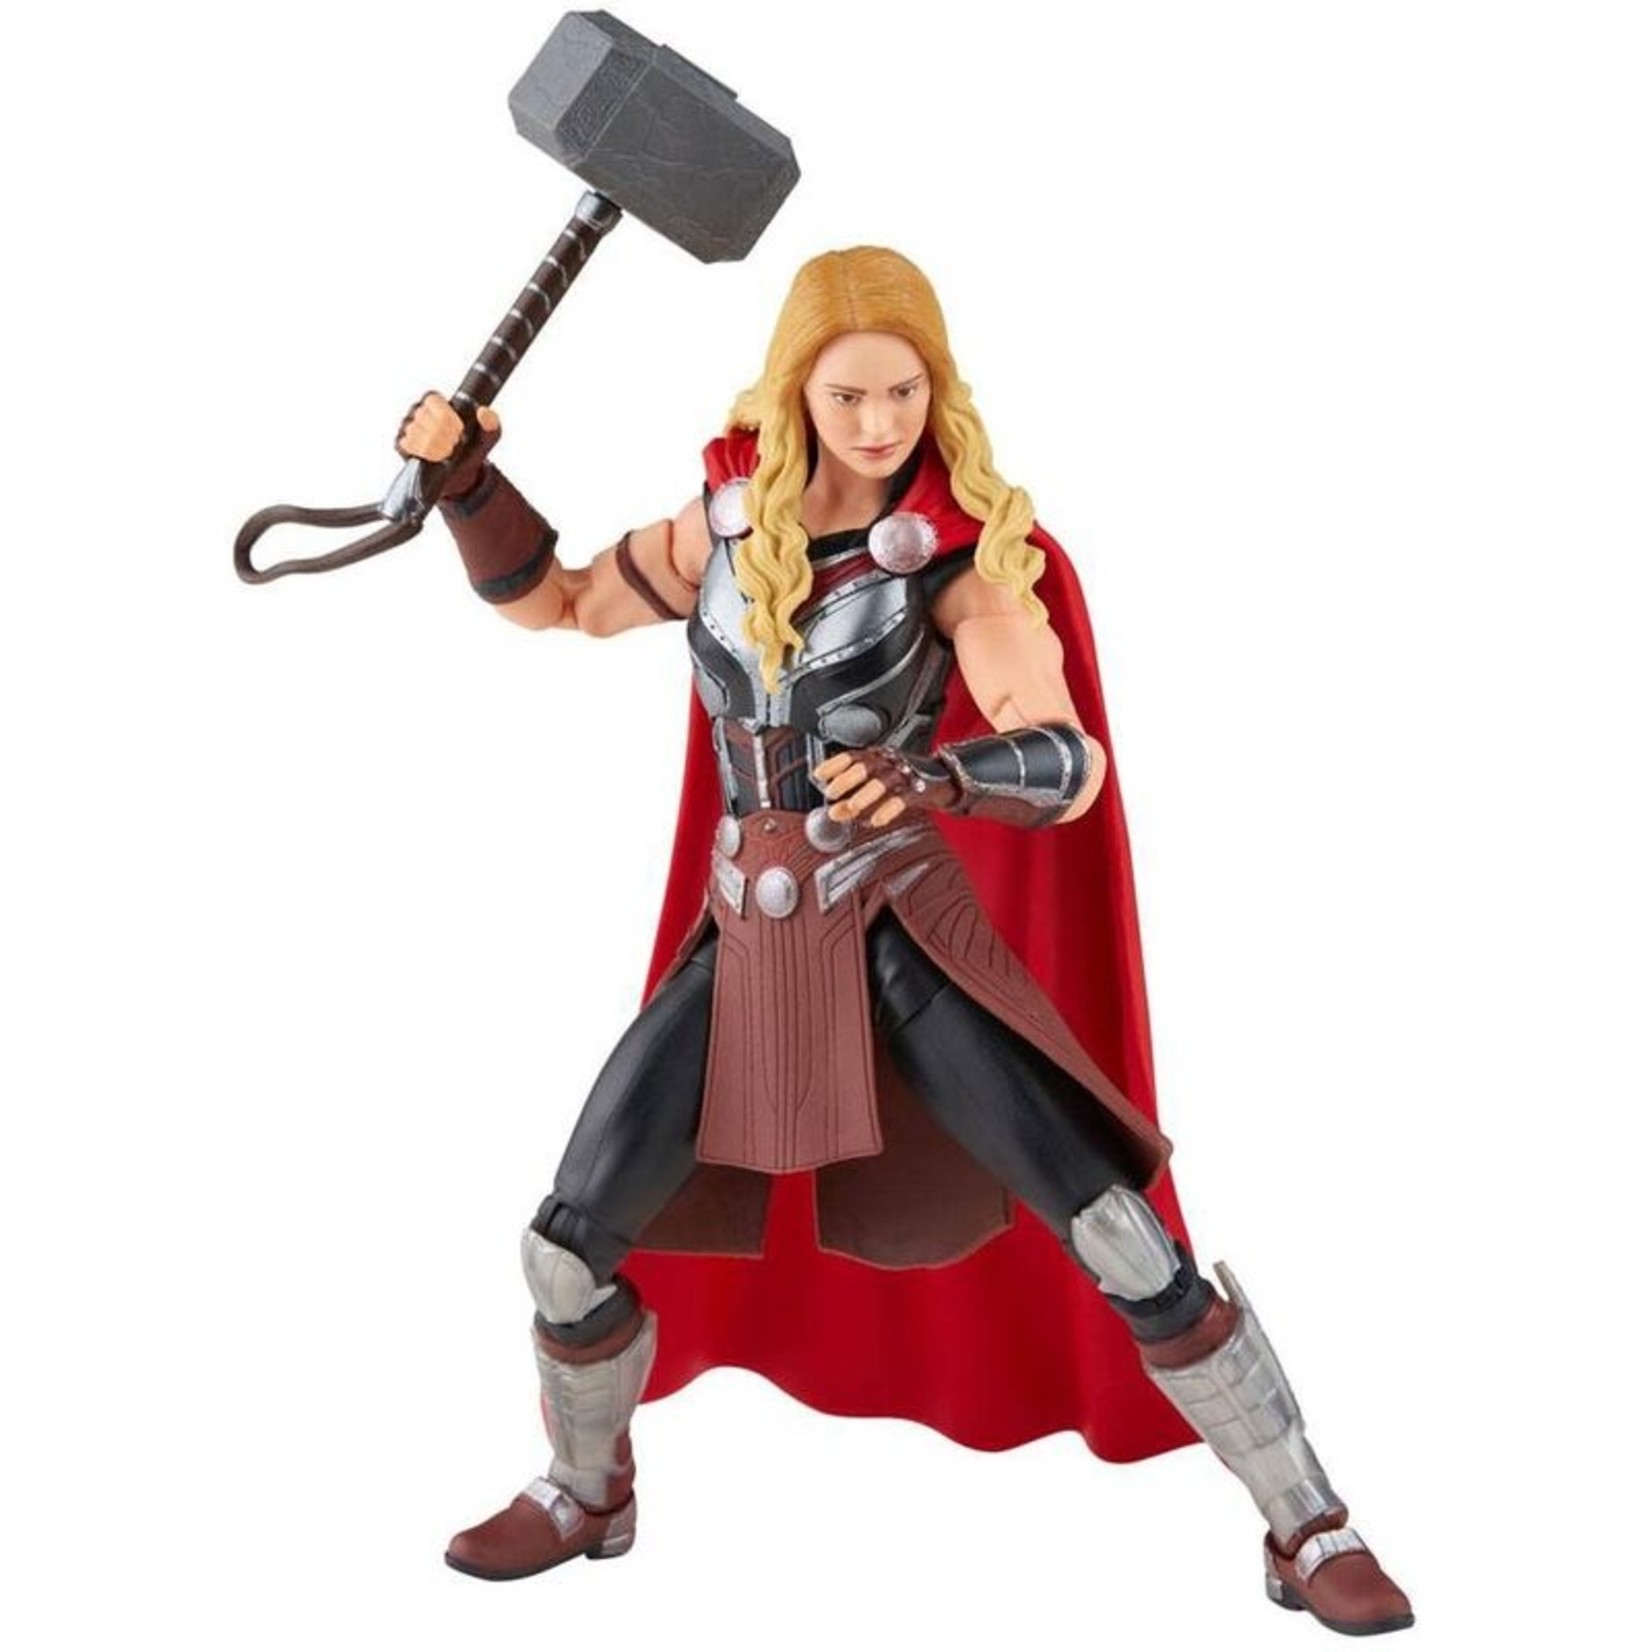 Hasbro Hasbro Marvel Legends Thor Love and Thunder Mighty Thor Figure